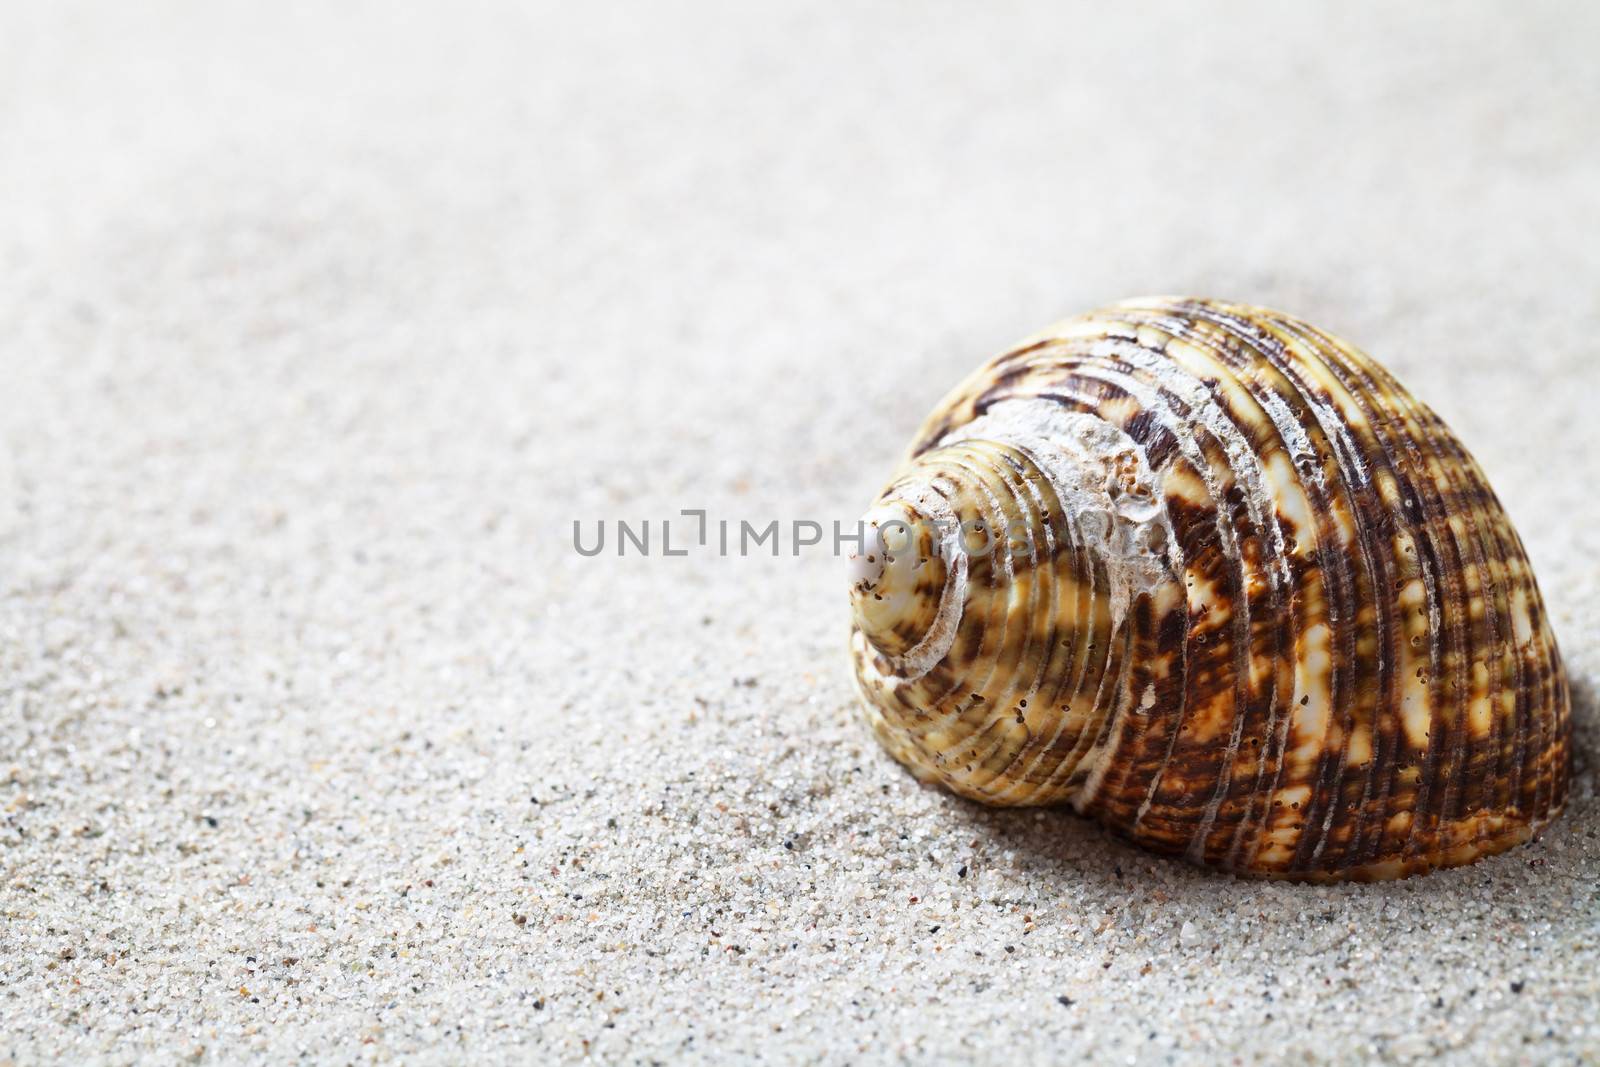 Sand And Shell by bozena_fulawka